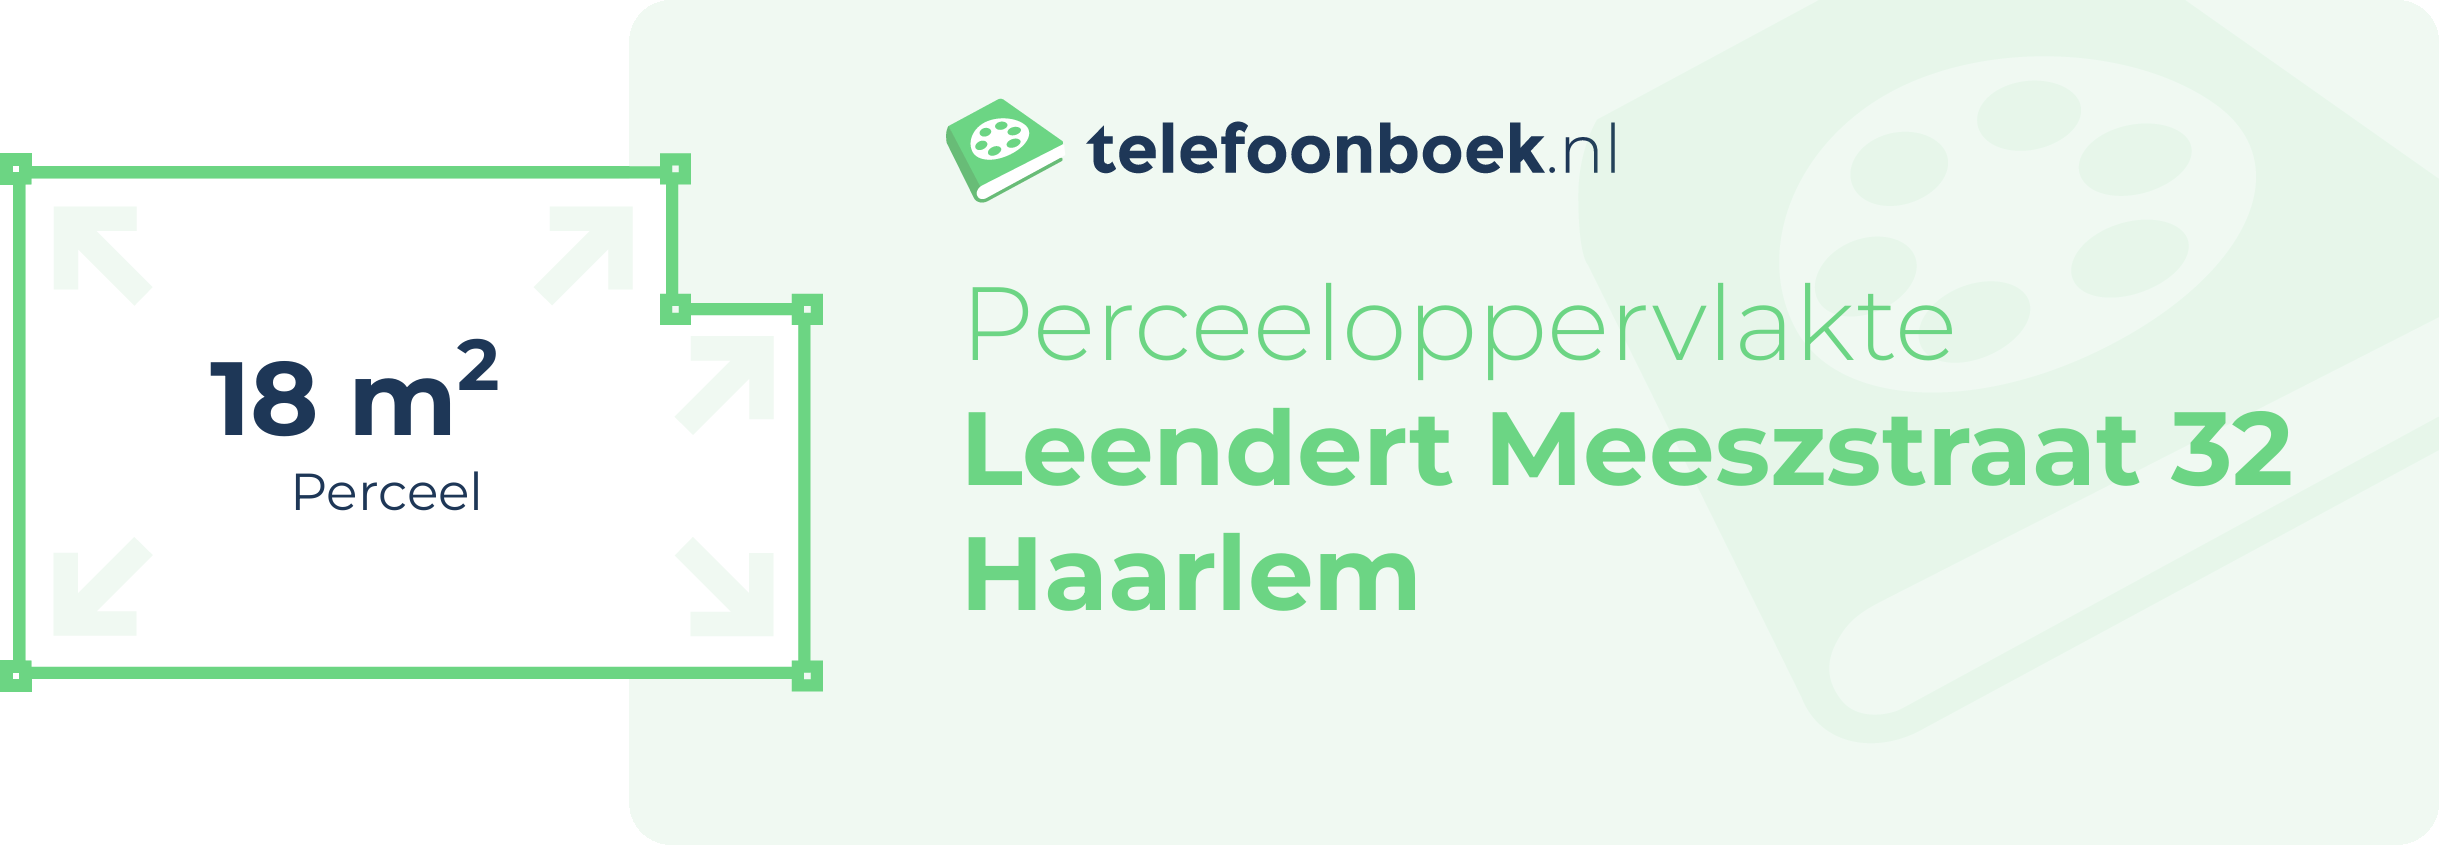 Perceeloppervlakte Leendert Meeszstraat 32 Haarlem